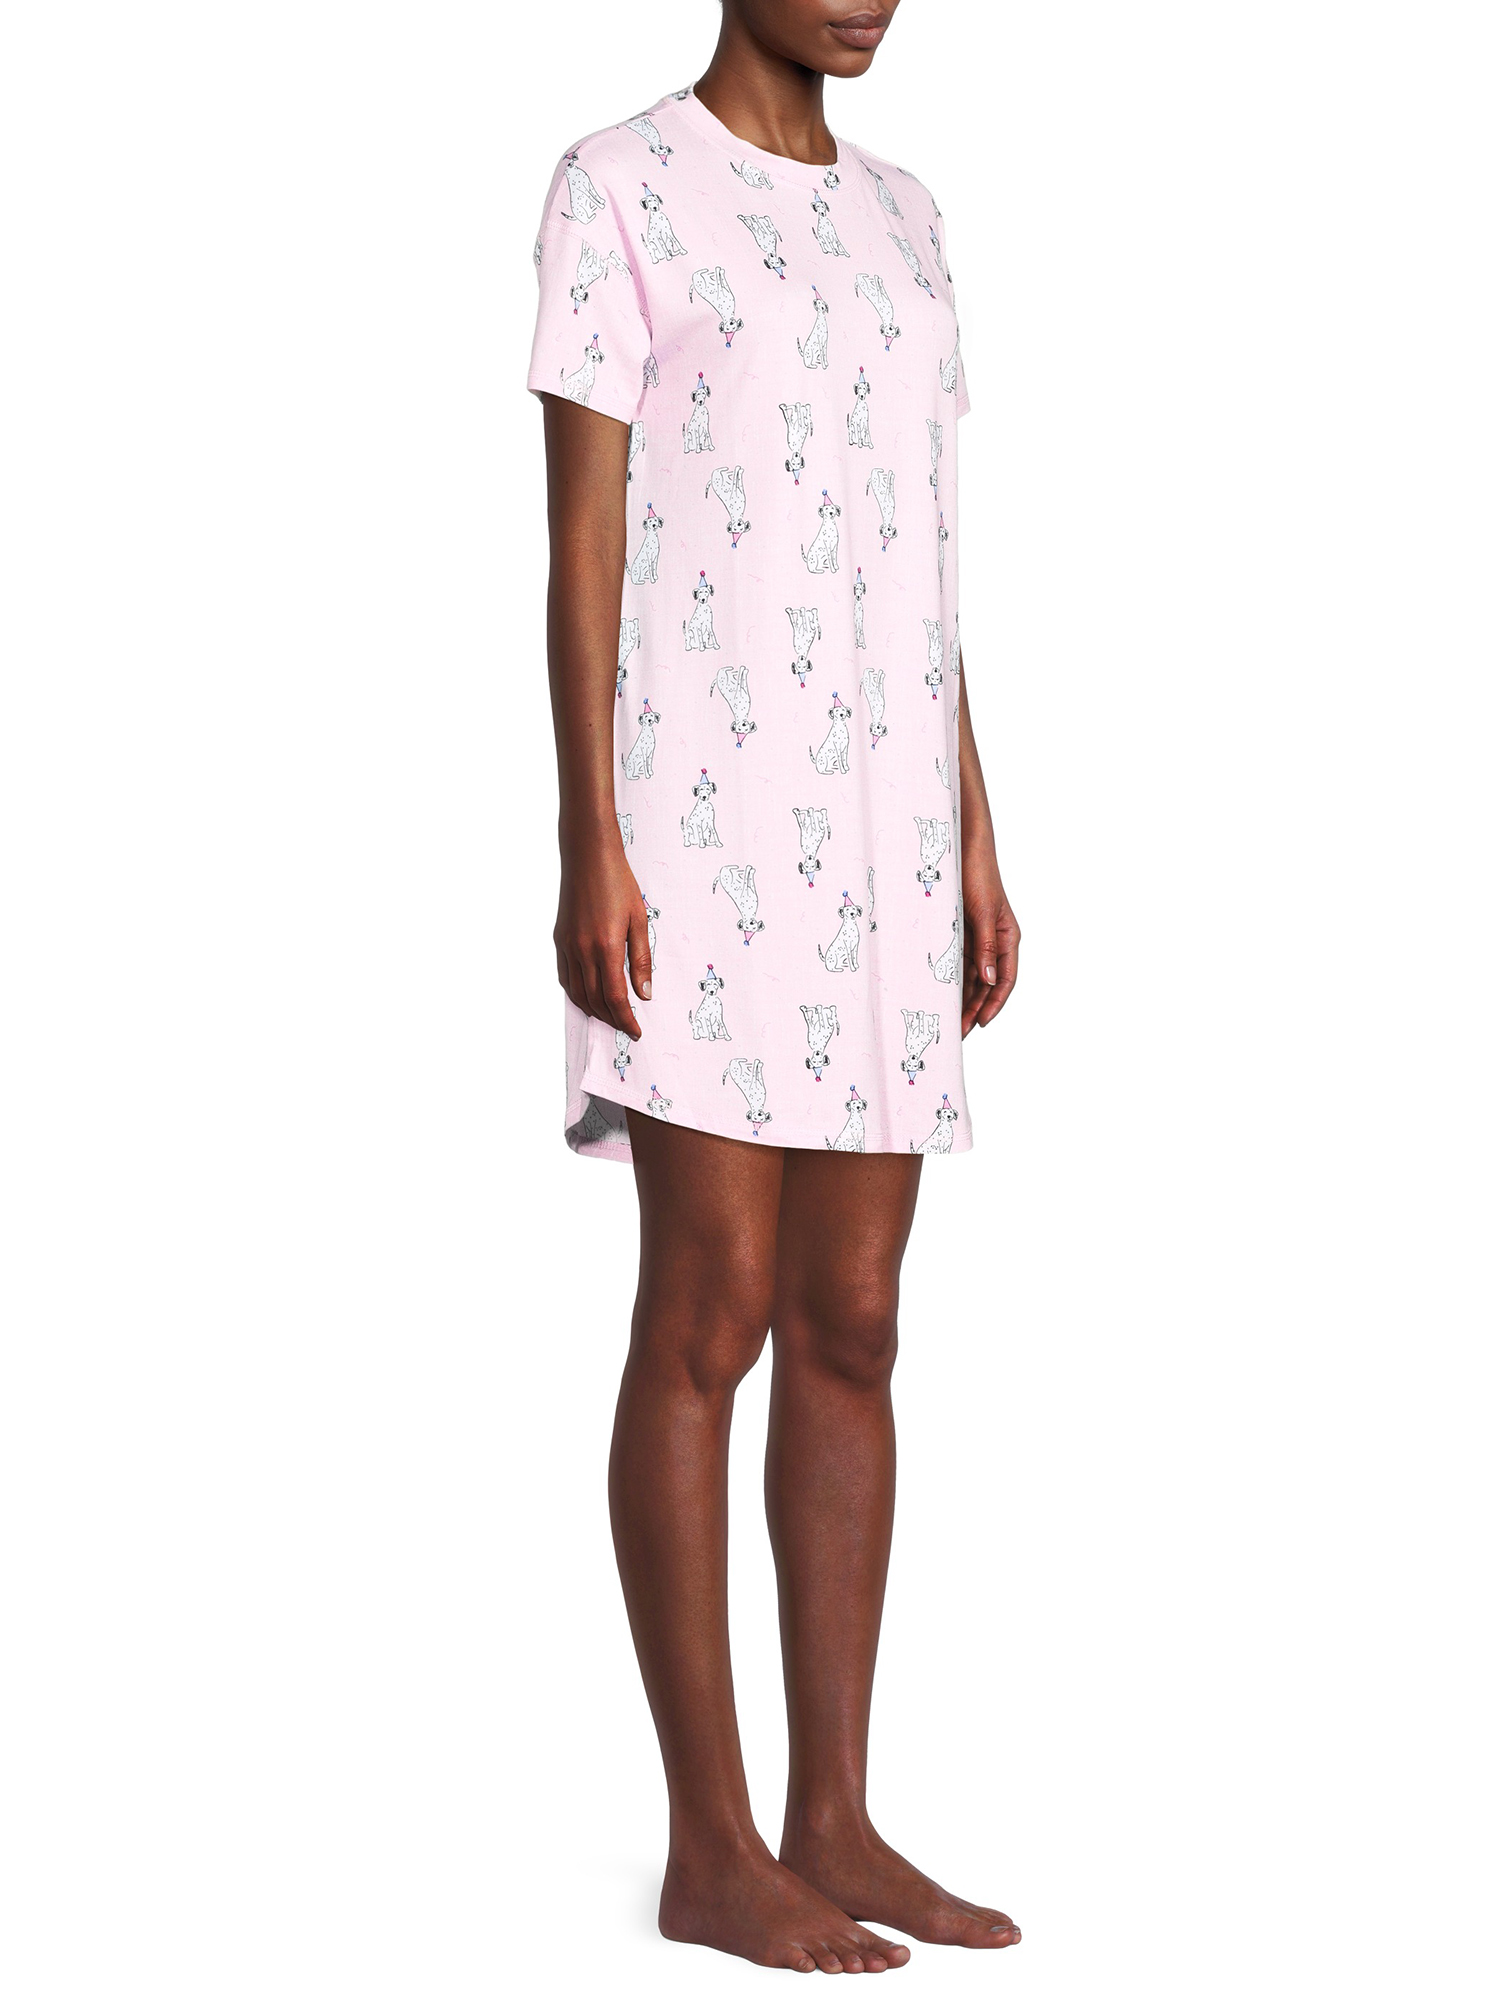 Jaclyn Women’s Hi-Lo Drop Shoulder Sleep Shirt - image 5 of 6